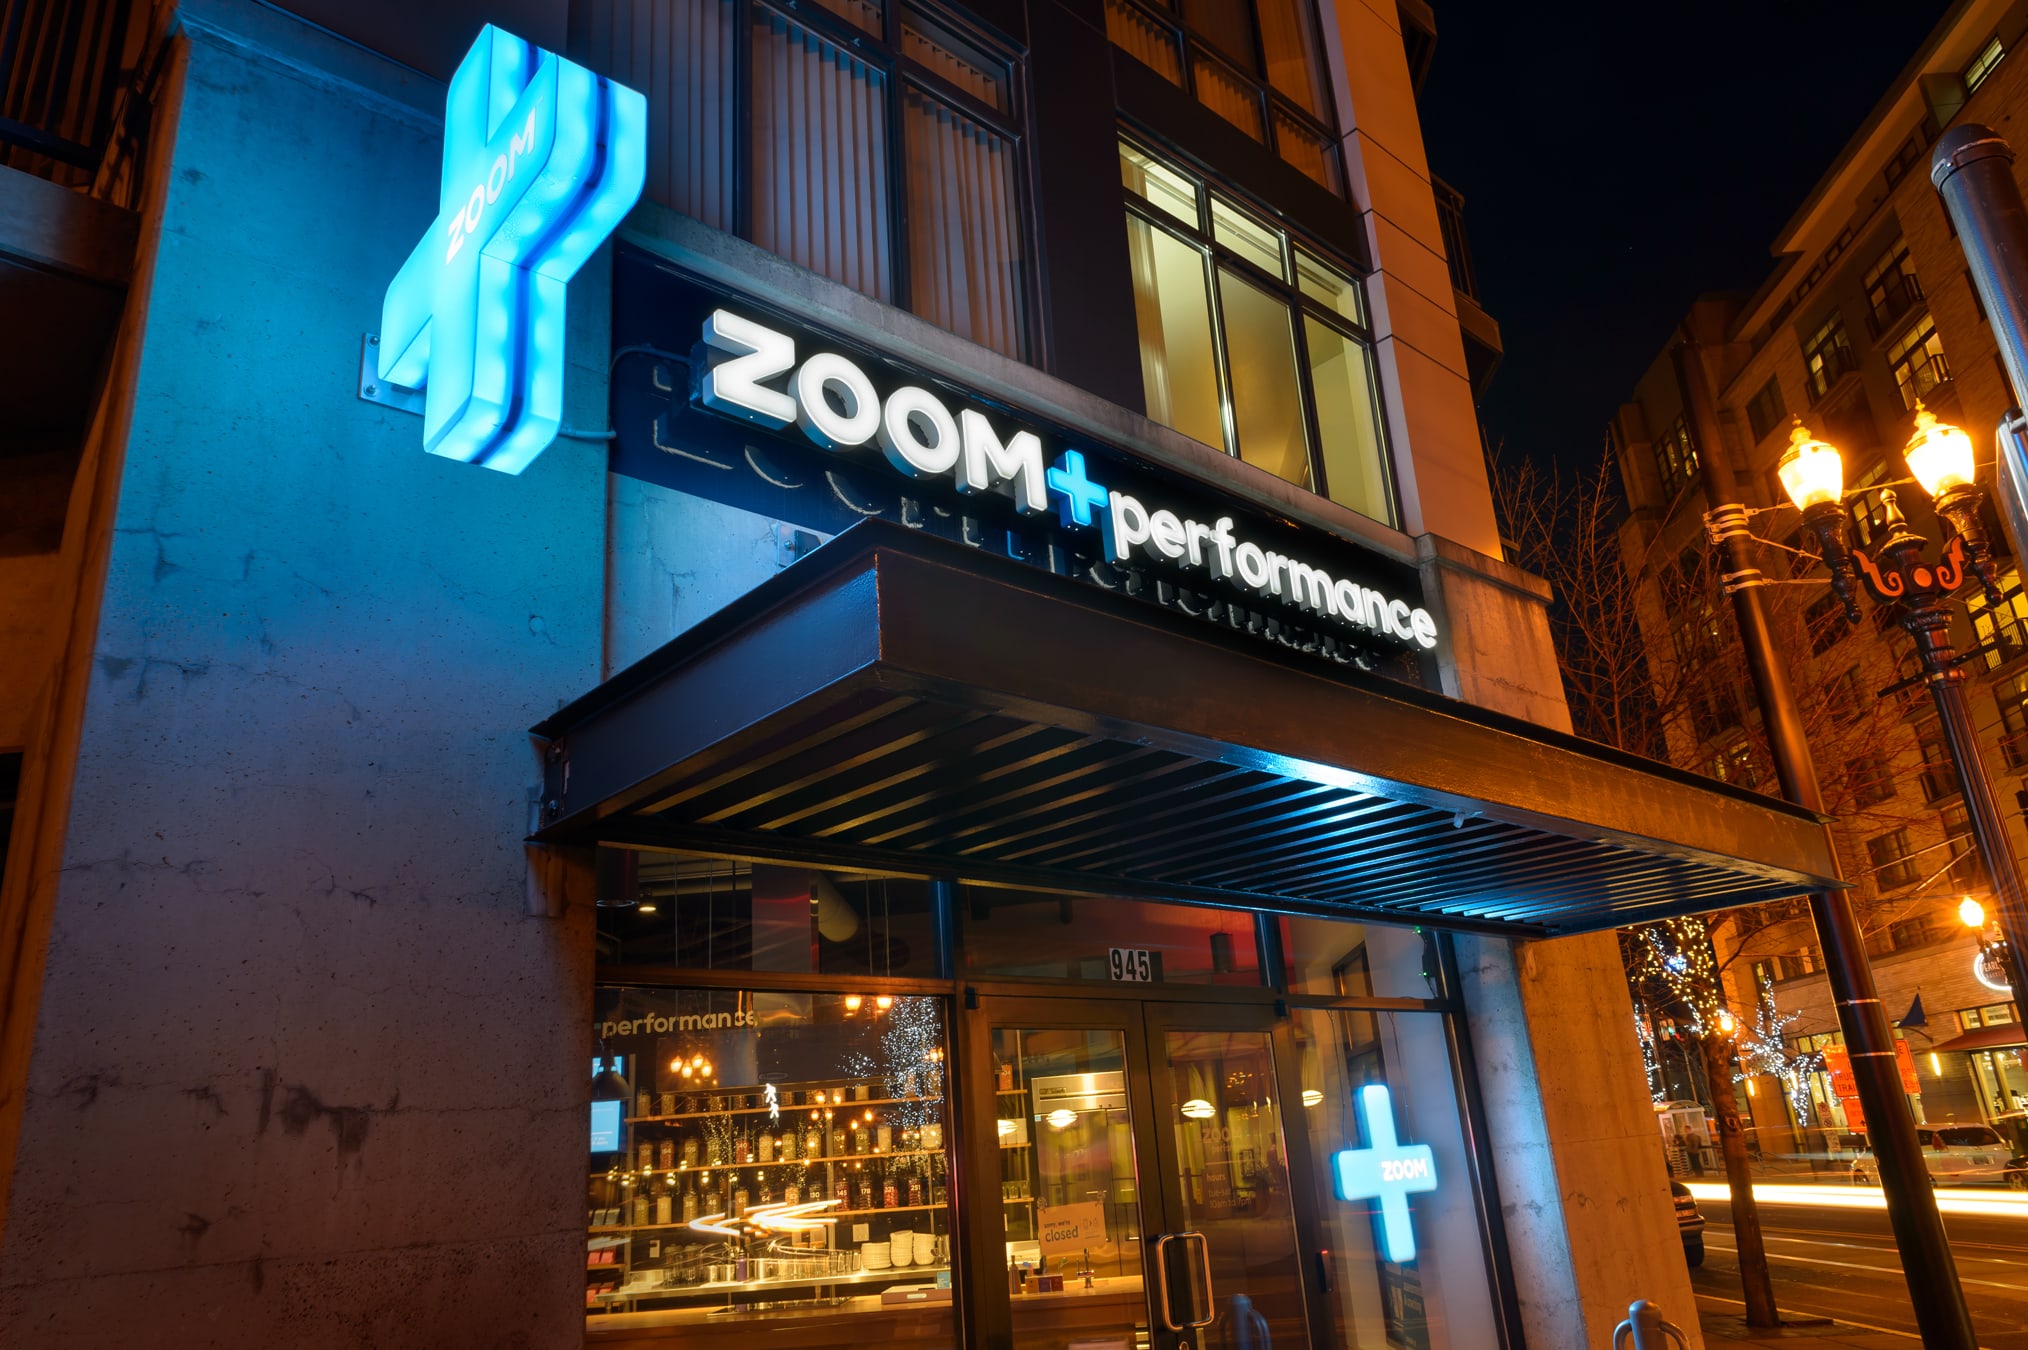 Zoom+ performance healthcare retail identity design